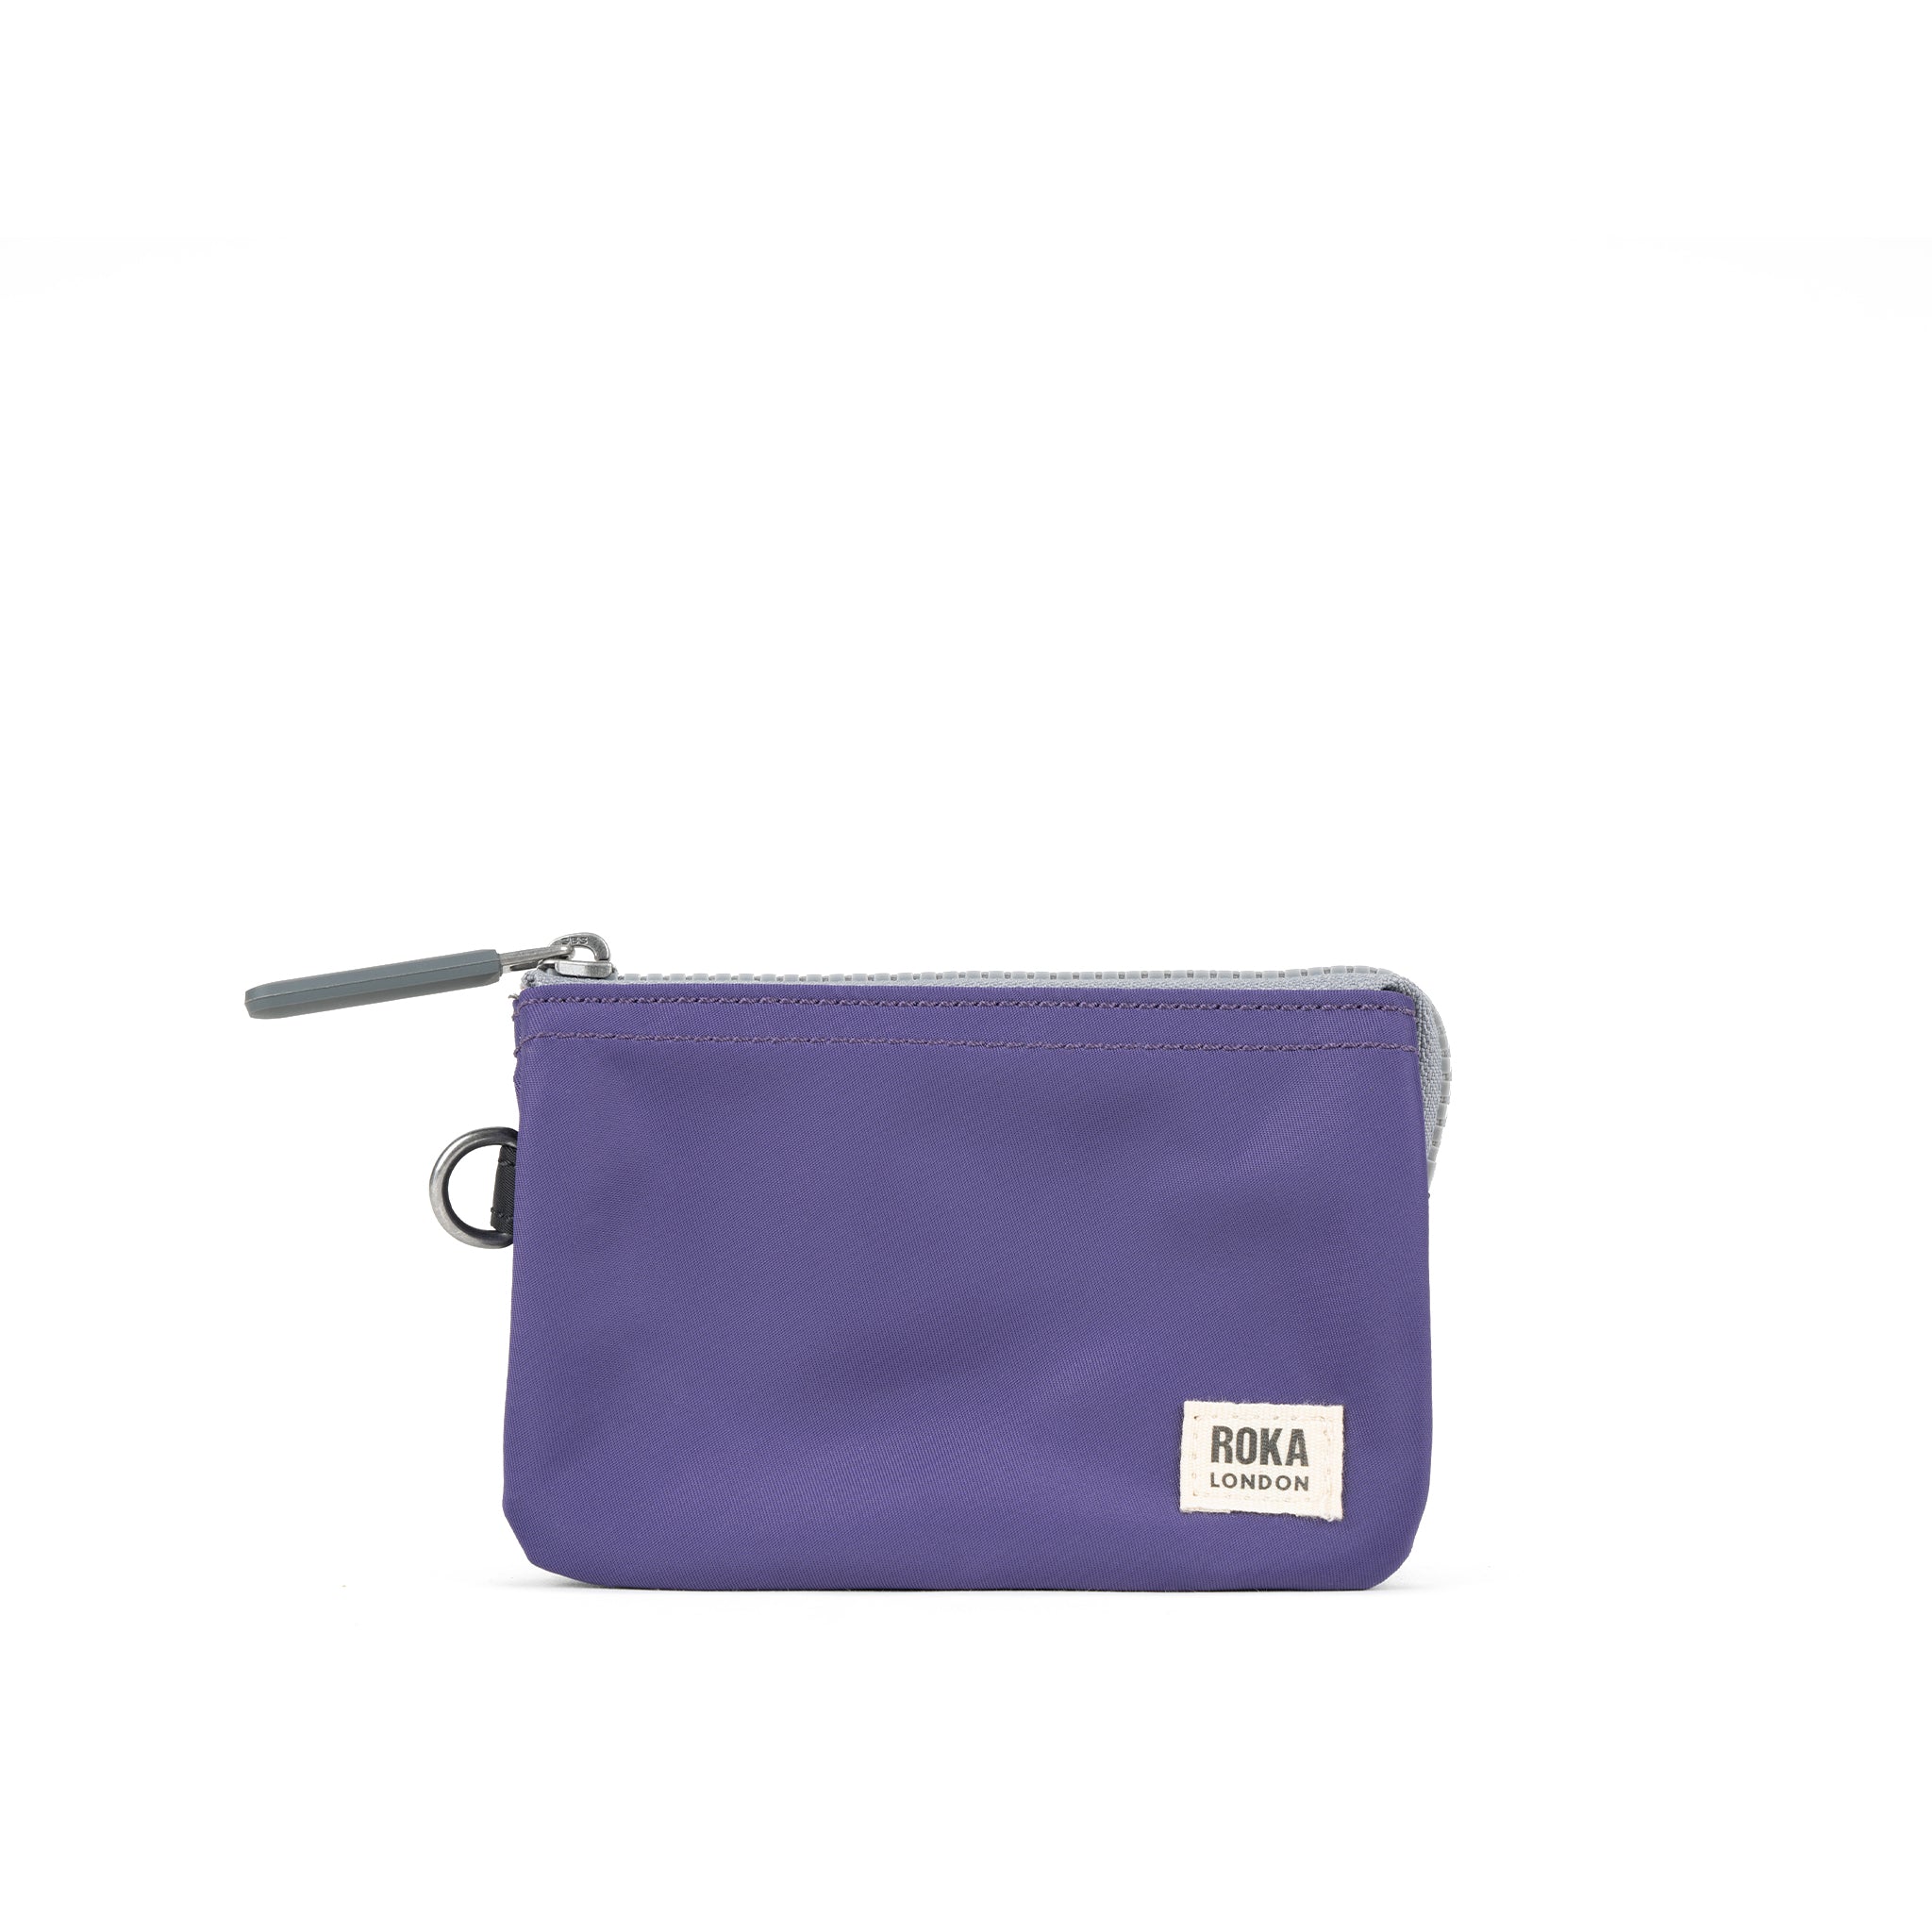 Mulberry Tea Party | Mulberry handbags, Purple handbags, Bags